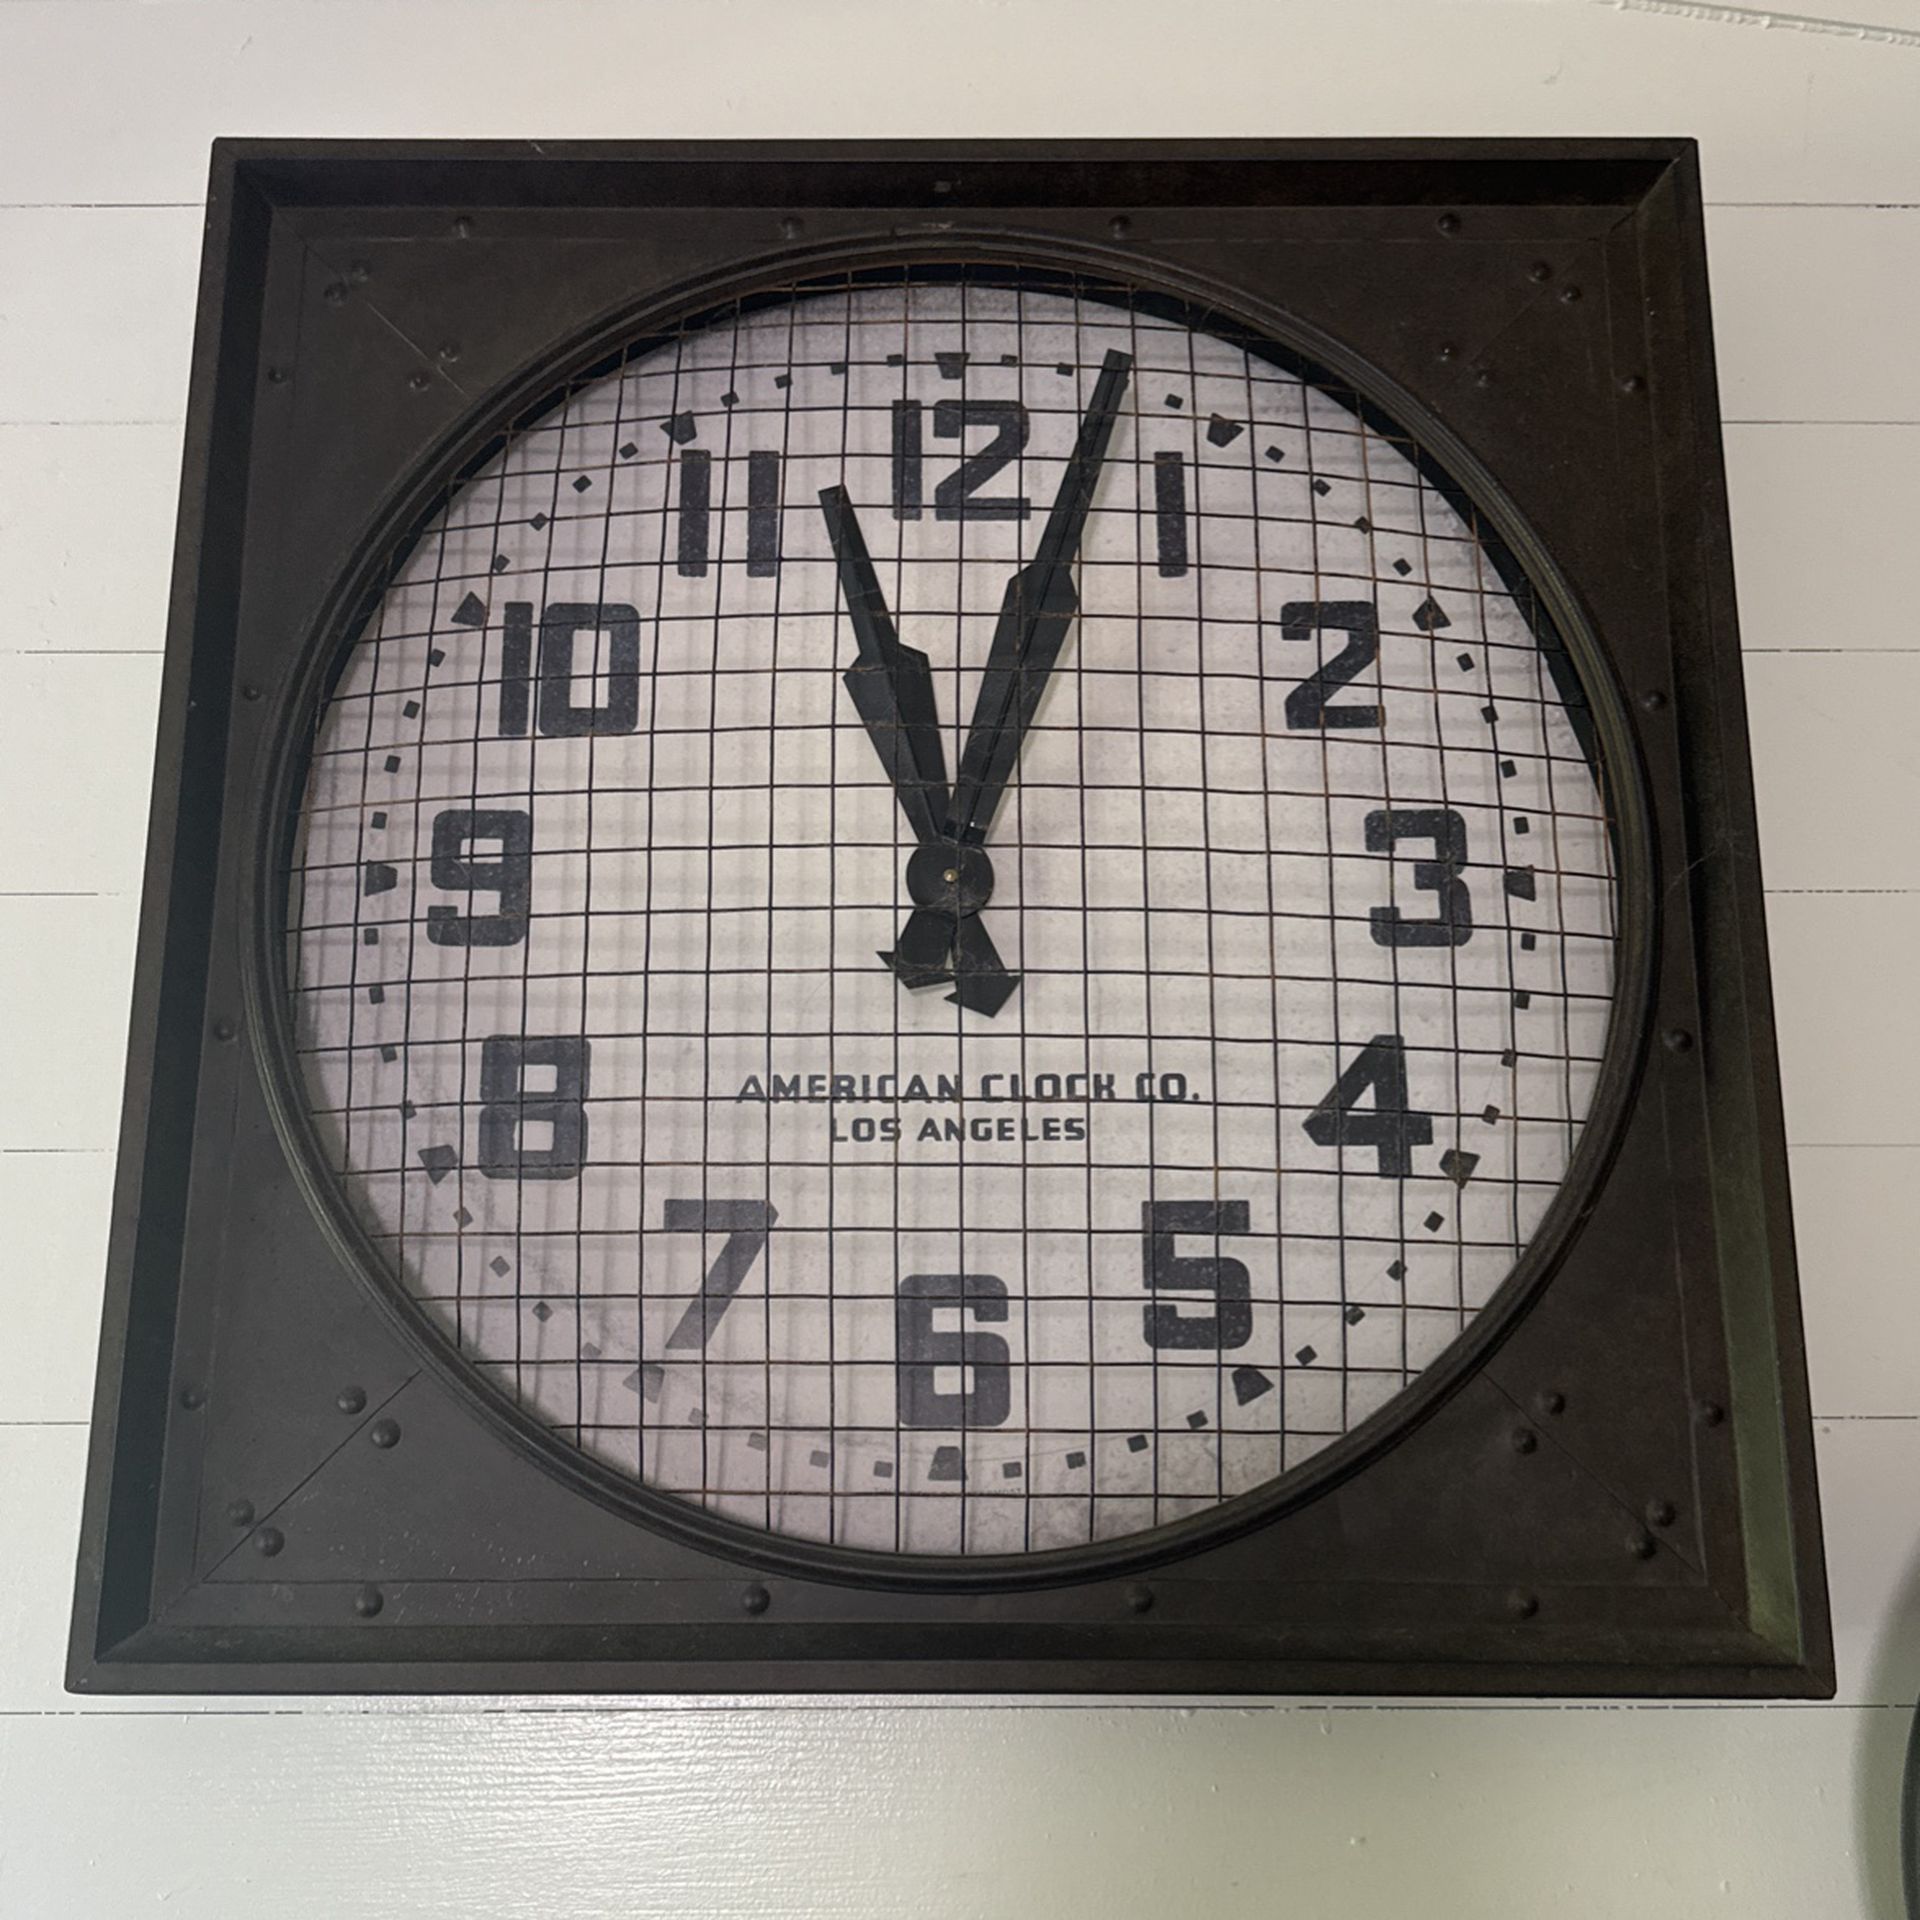 RH Gymnasium Clock